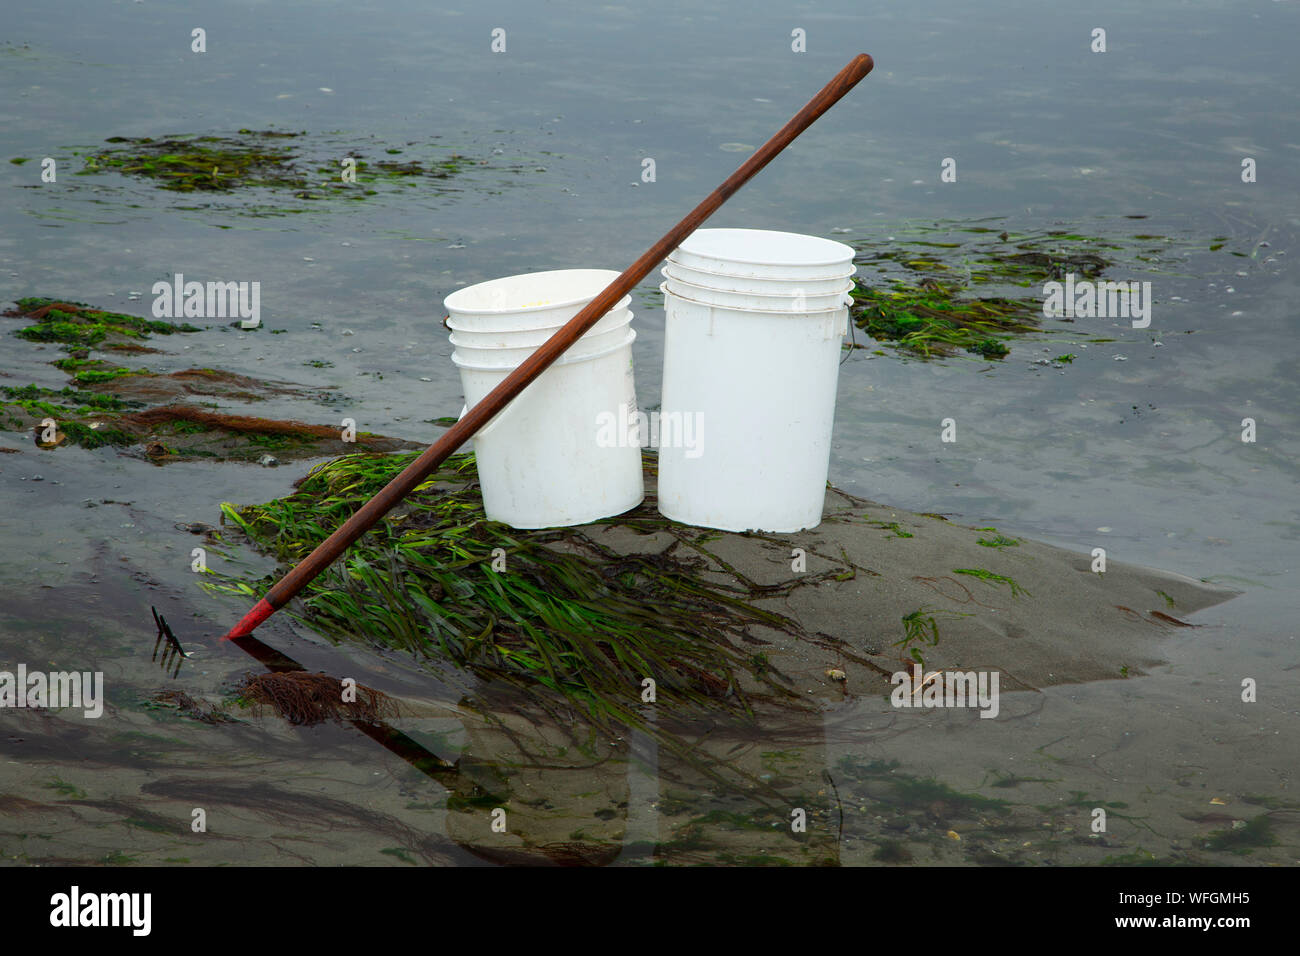 Clamming buckets and rake in Alsea Bay, Waldport, Oregon Stock Photo